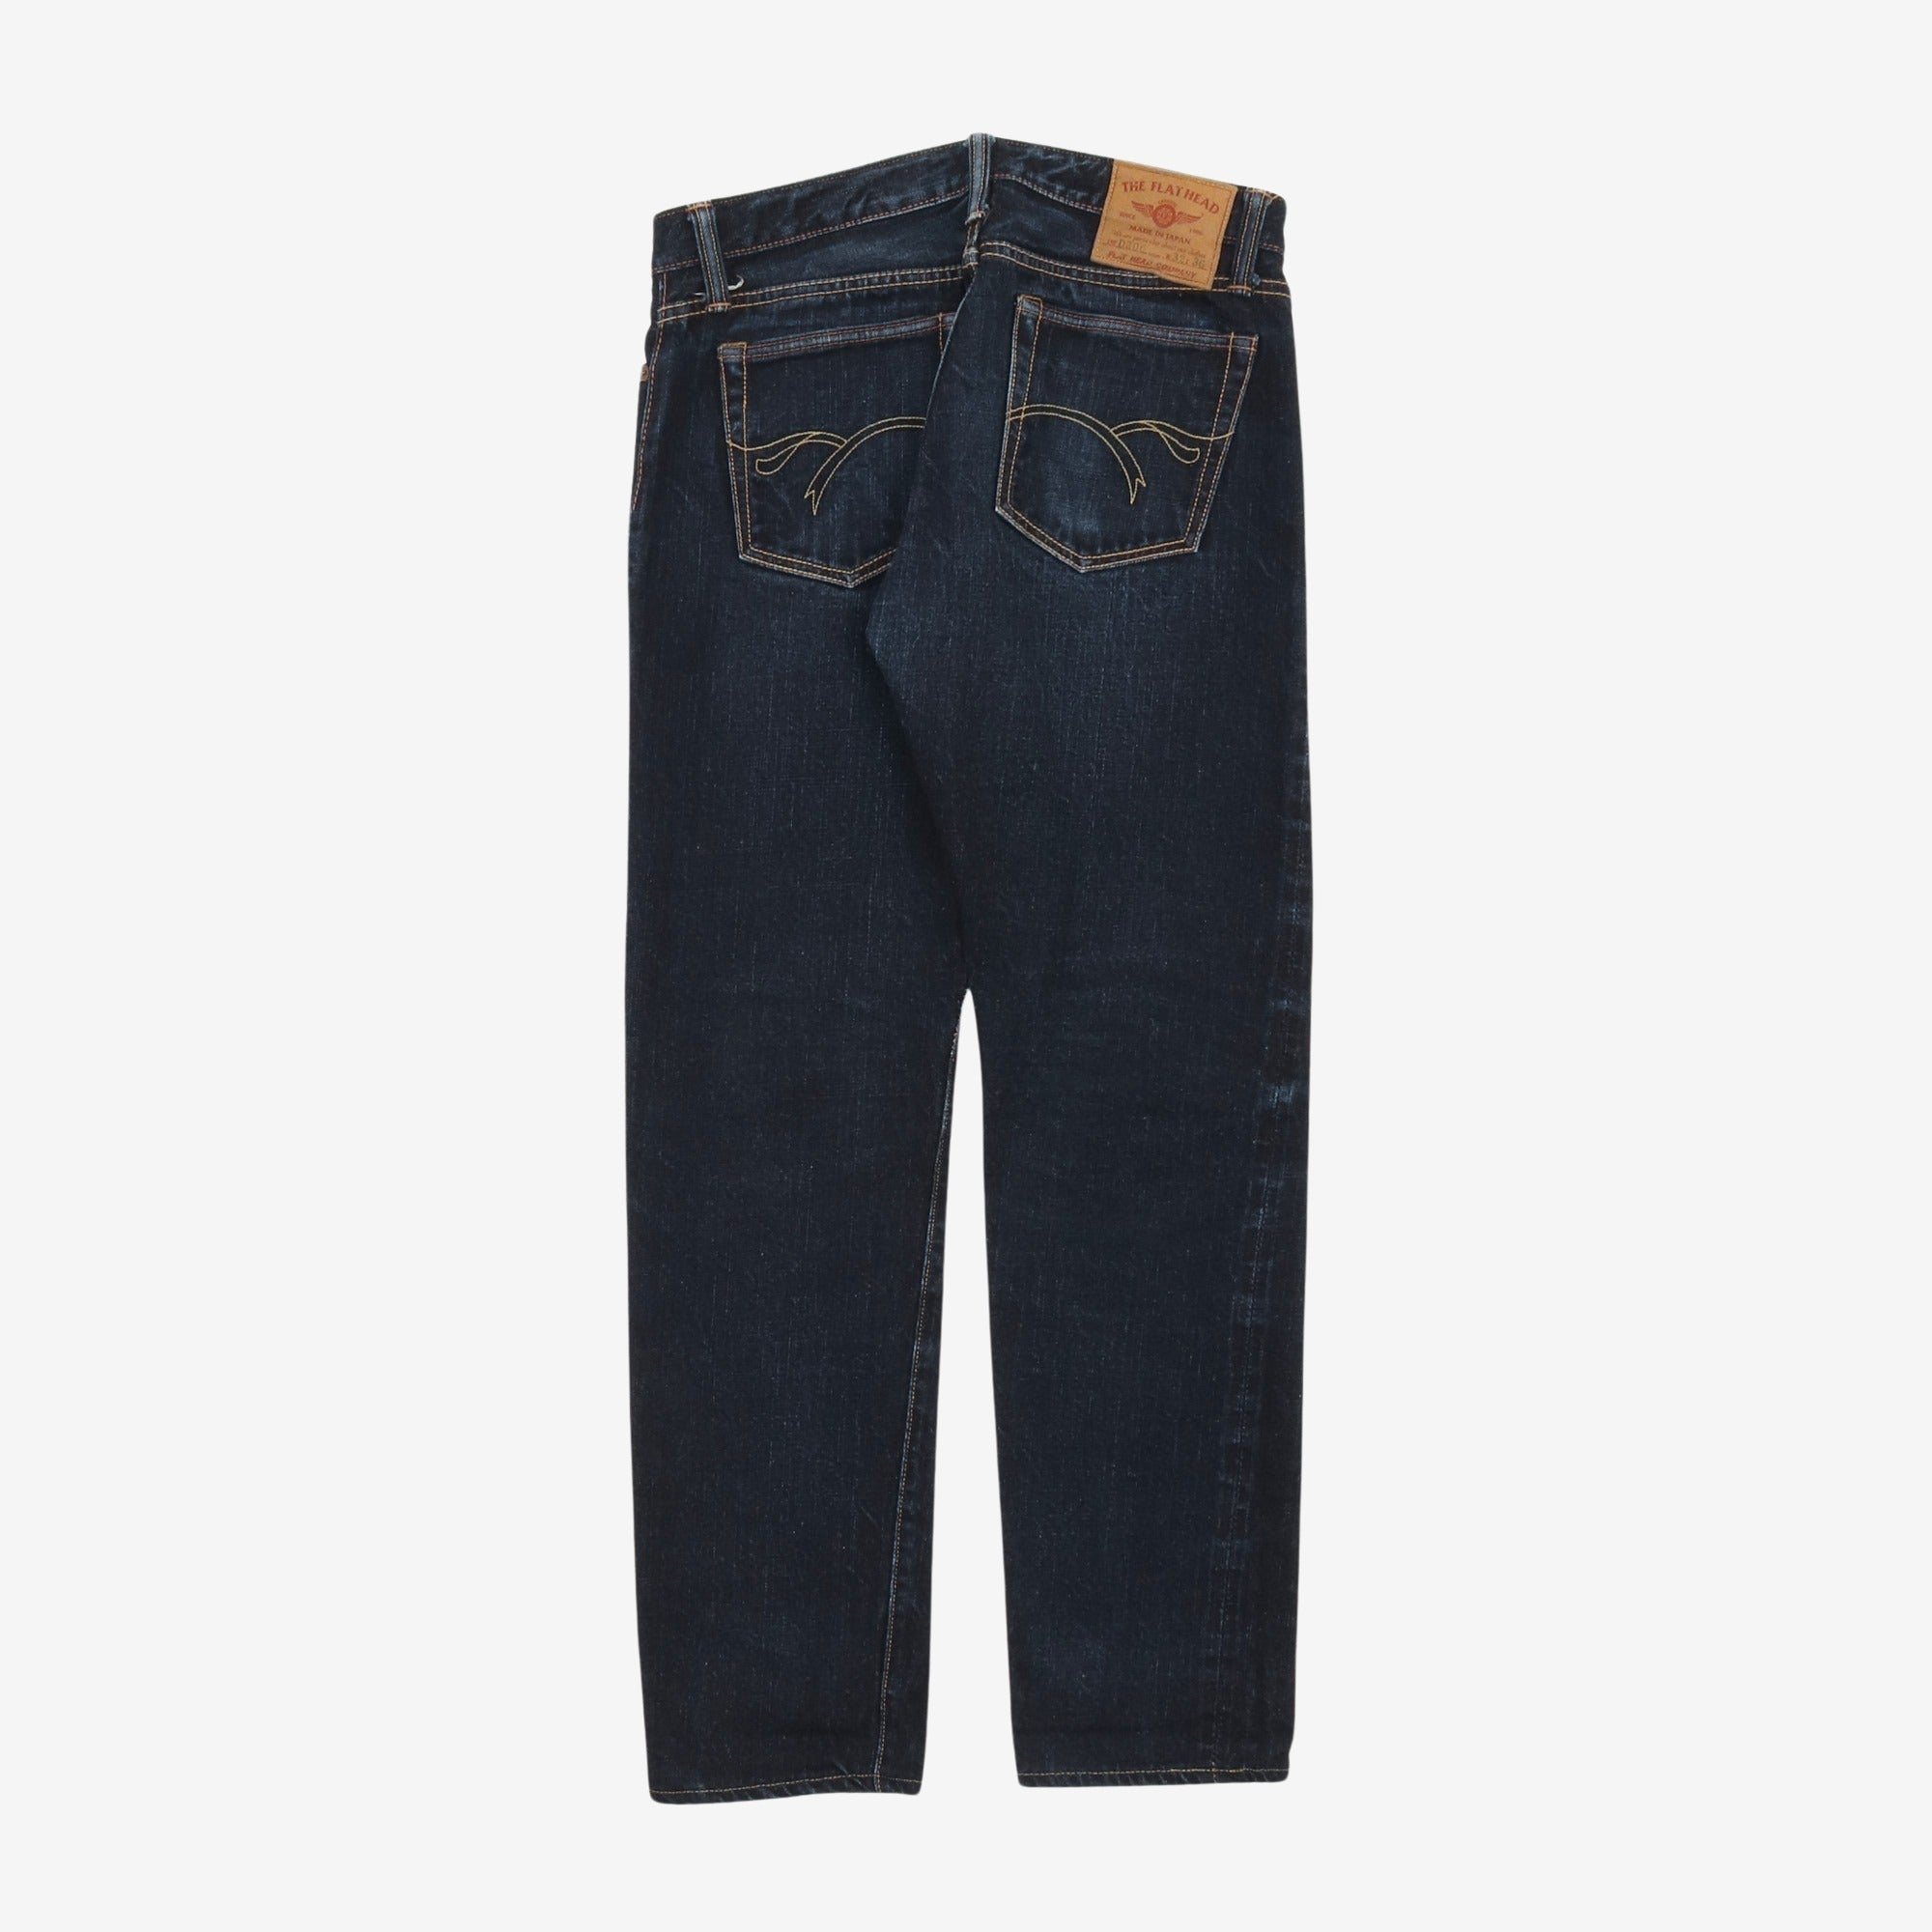 Lot D306 Selvedge Jeans